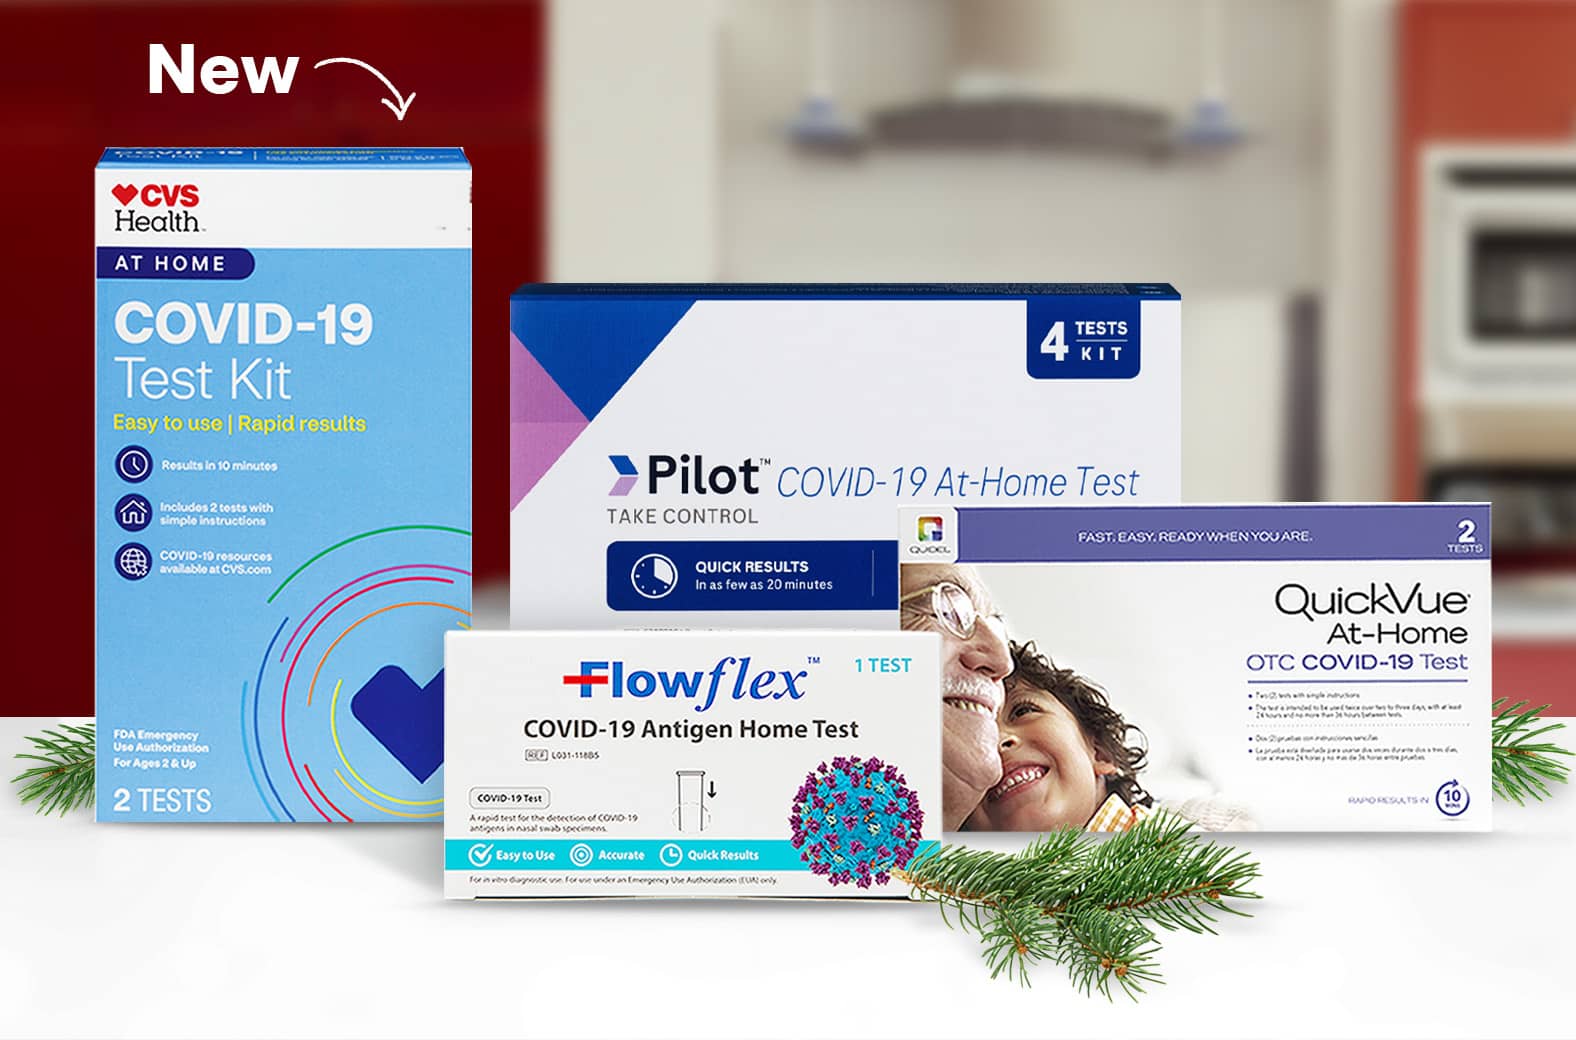 New CVS Health COVID-19 Test Kit, Pilot, Flowfles and BinaxNow at-home COVID-19 test kits